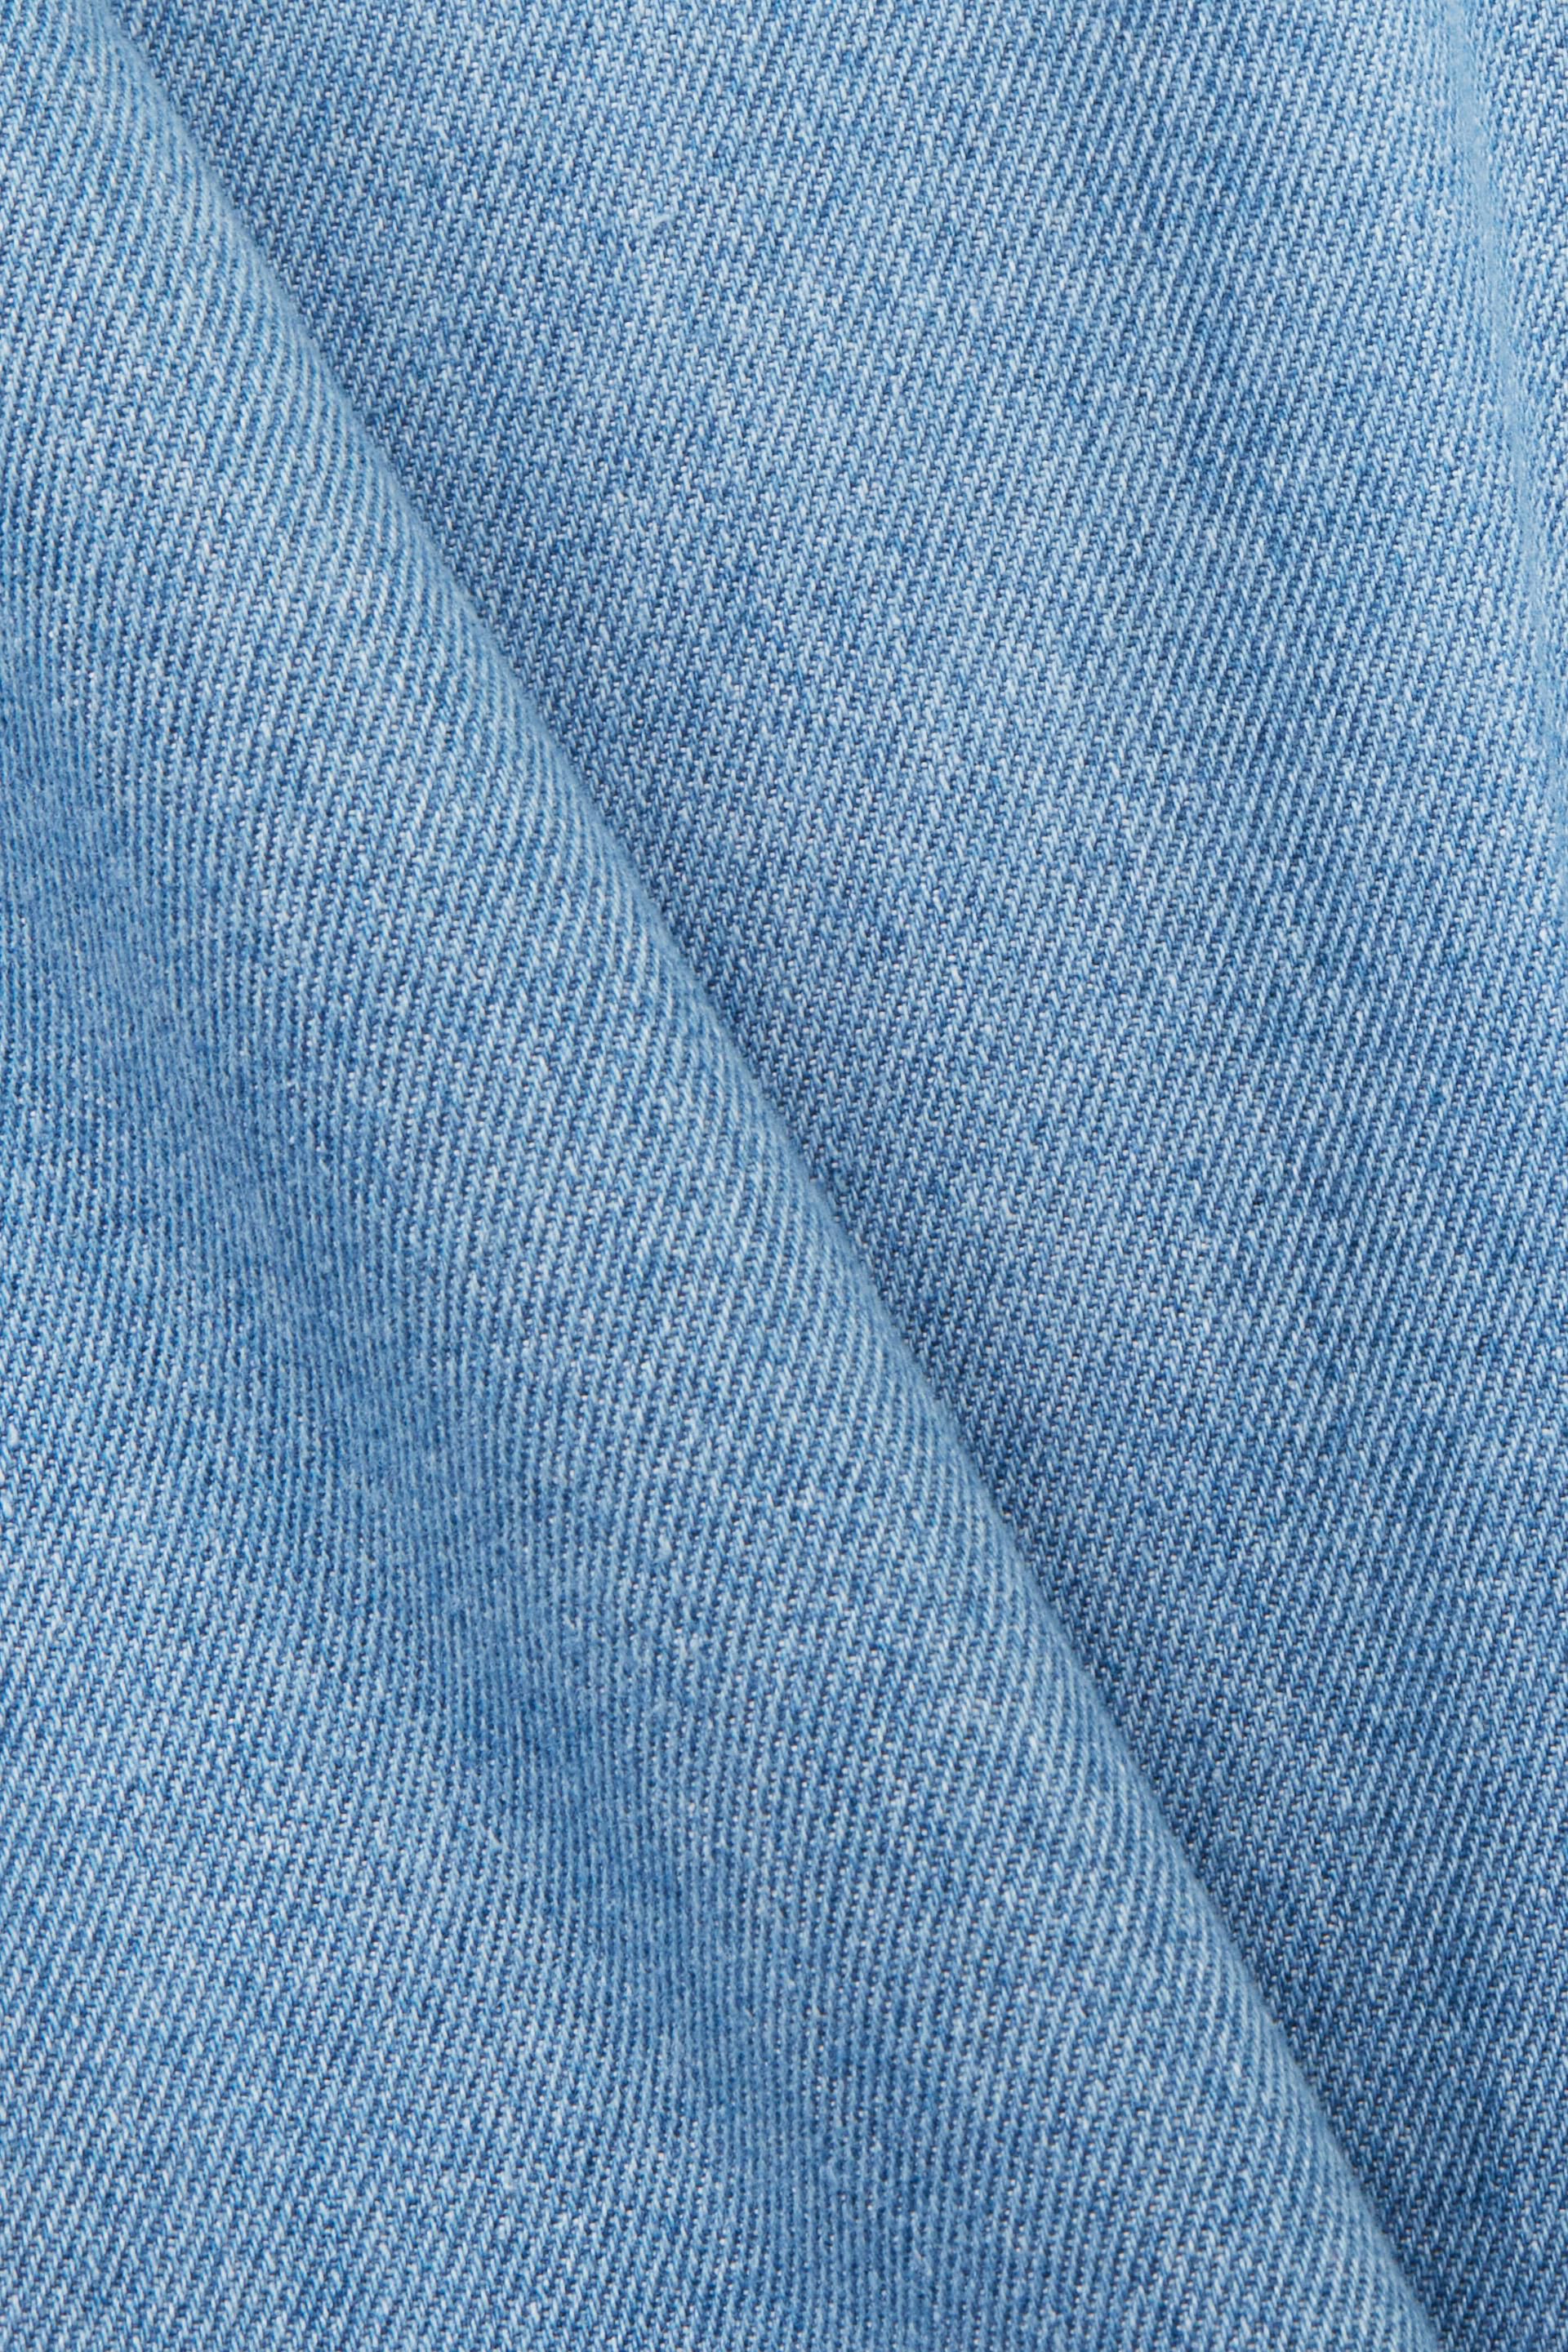 Hemp & Organic Cotton Mid-Weight Twill Denim Fabric ( HG09142 )